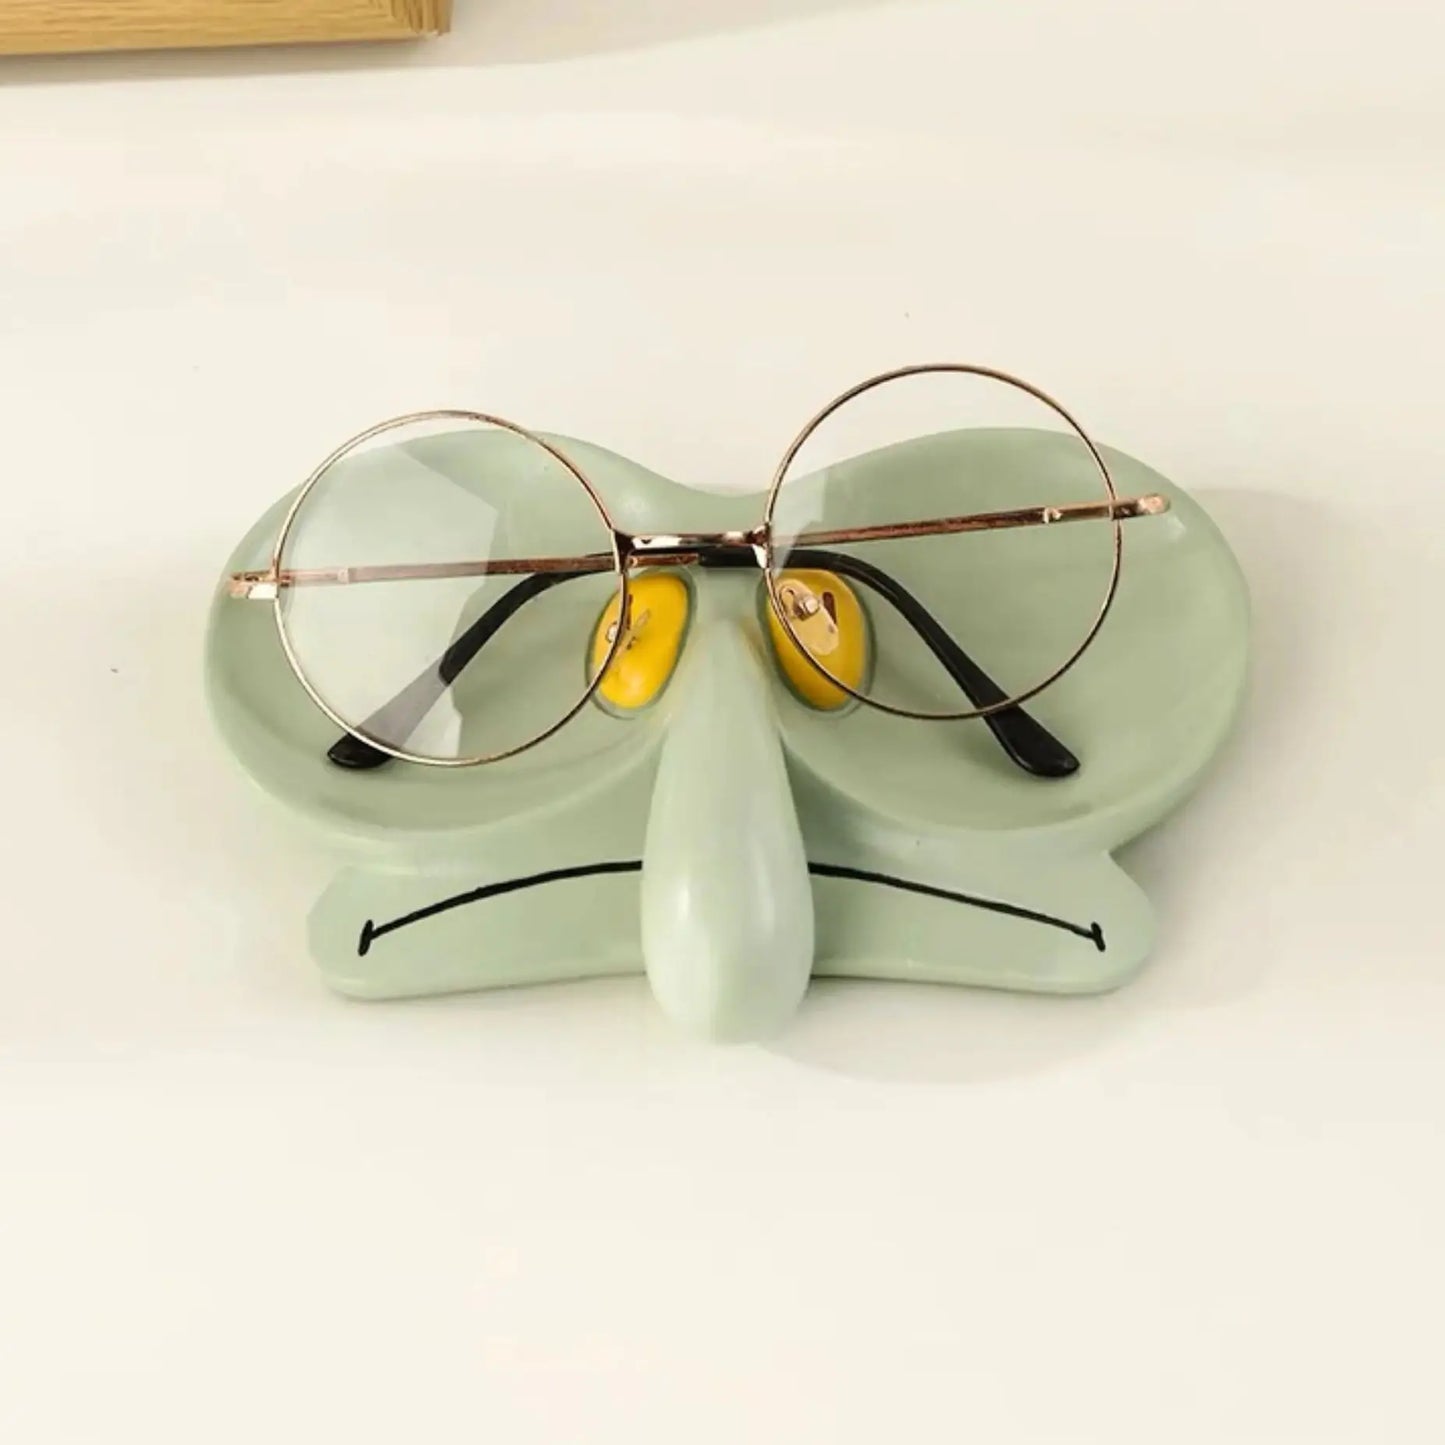 Squidward inspired Eyeglass Tray